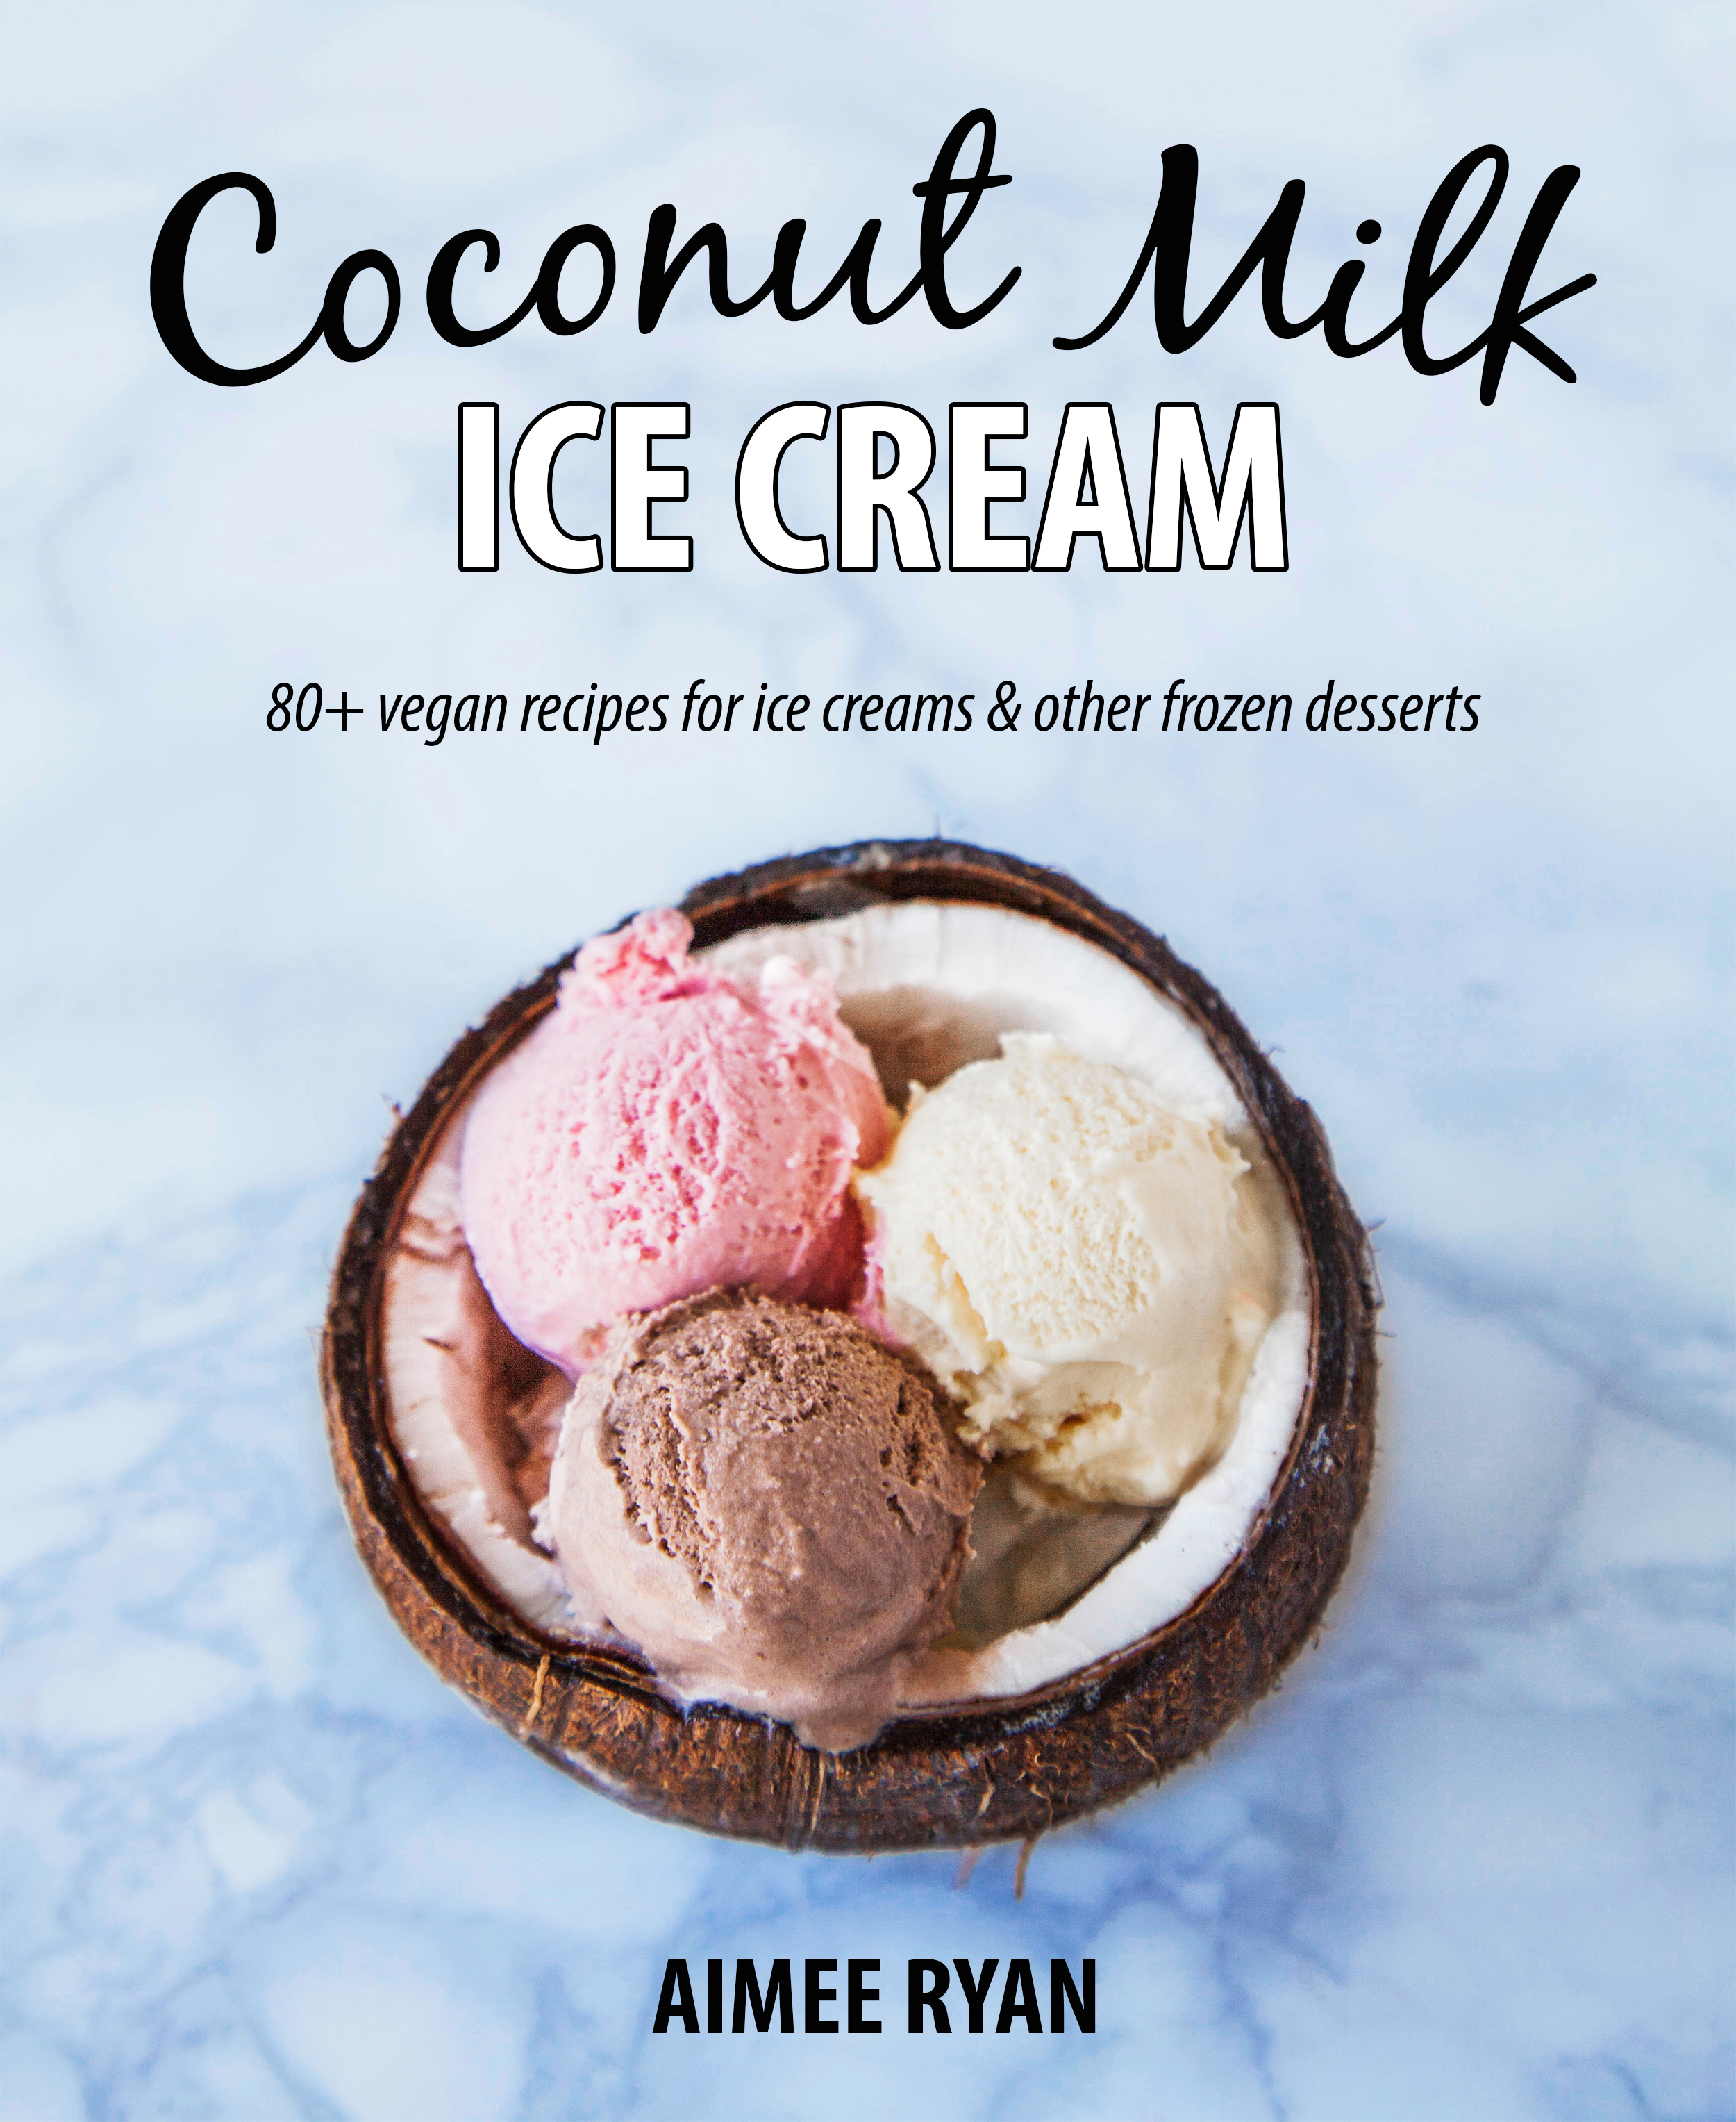 Coconut Milk Ice Cream by Aimee Ryan